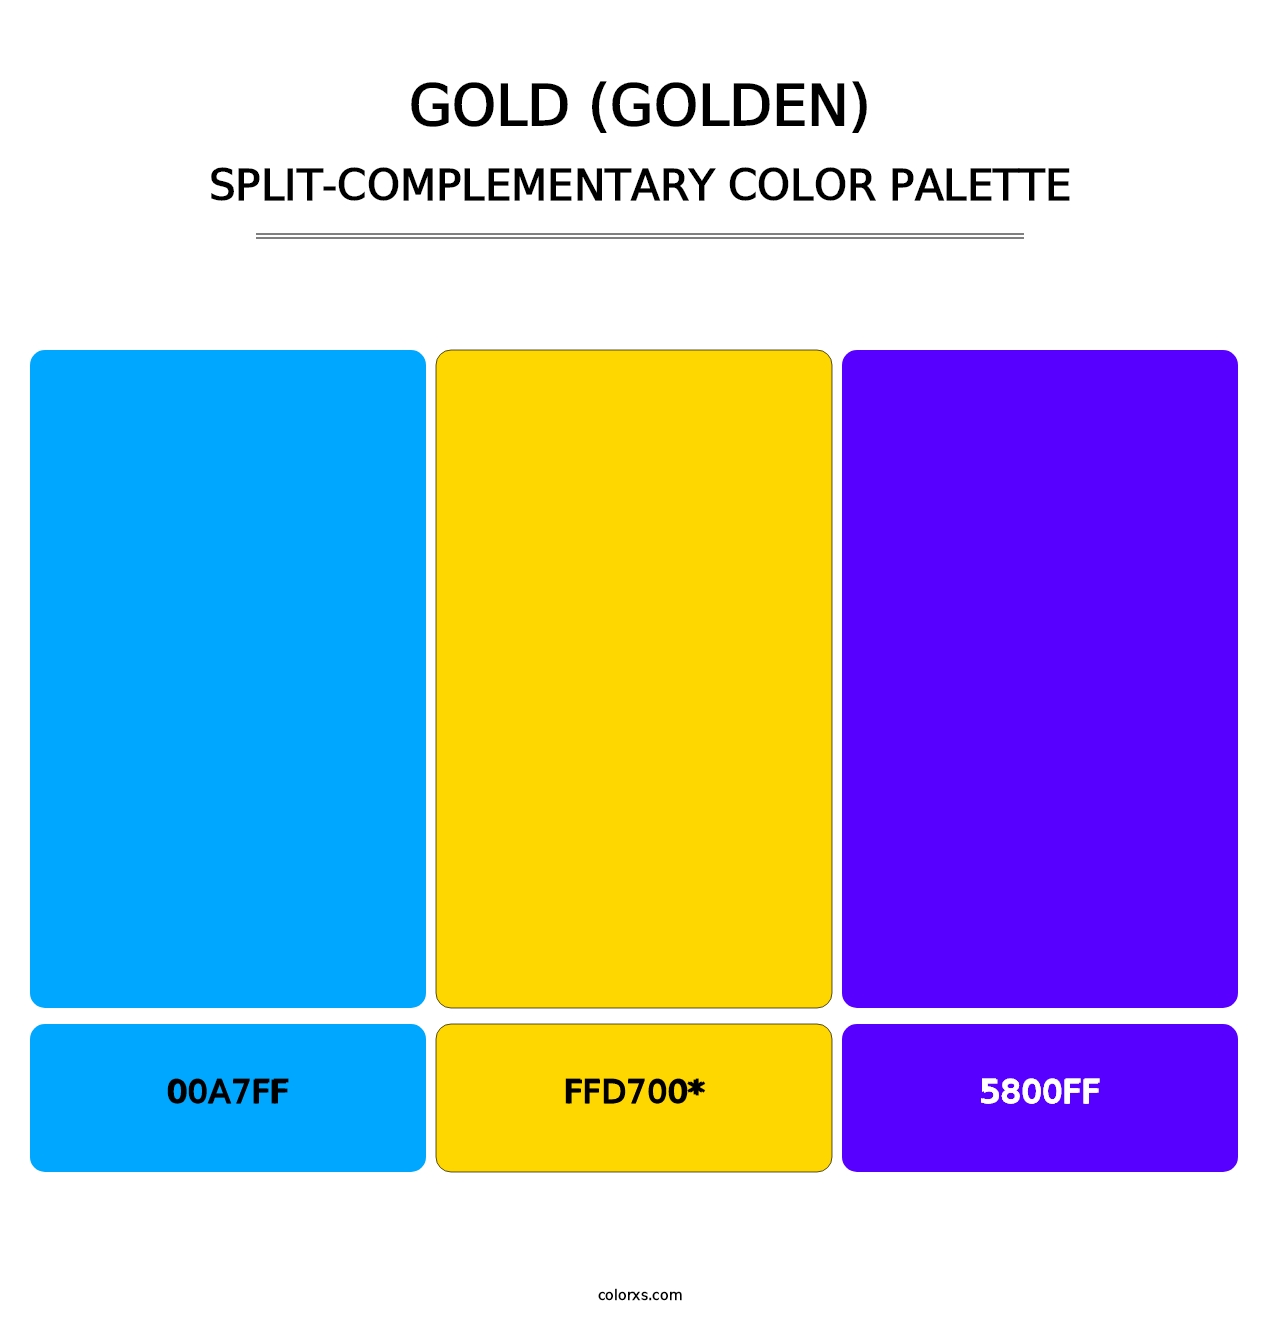 Gold (Golden) - Split-Complementary Color Palette